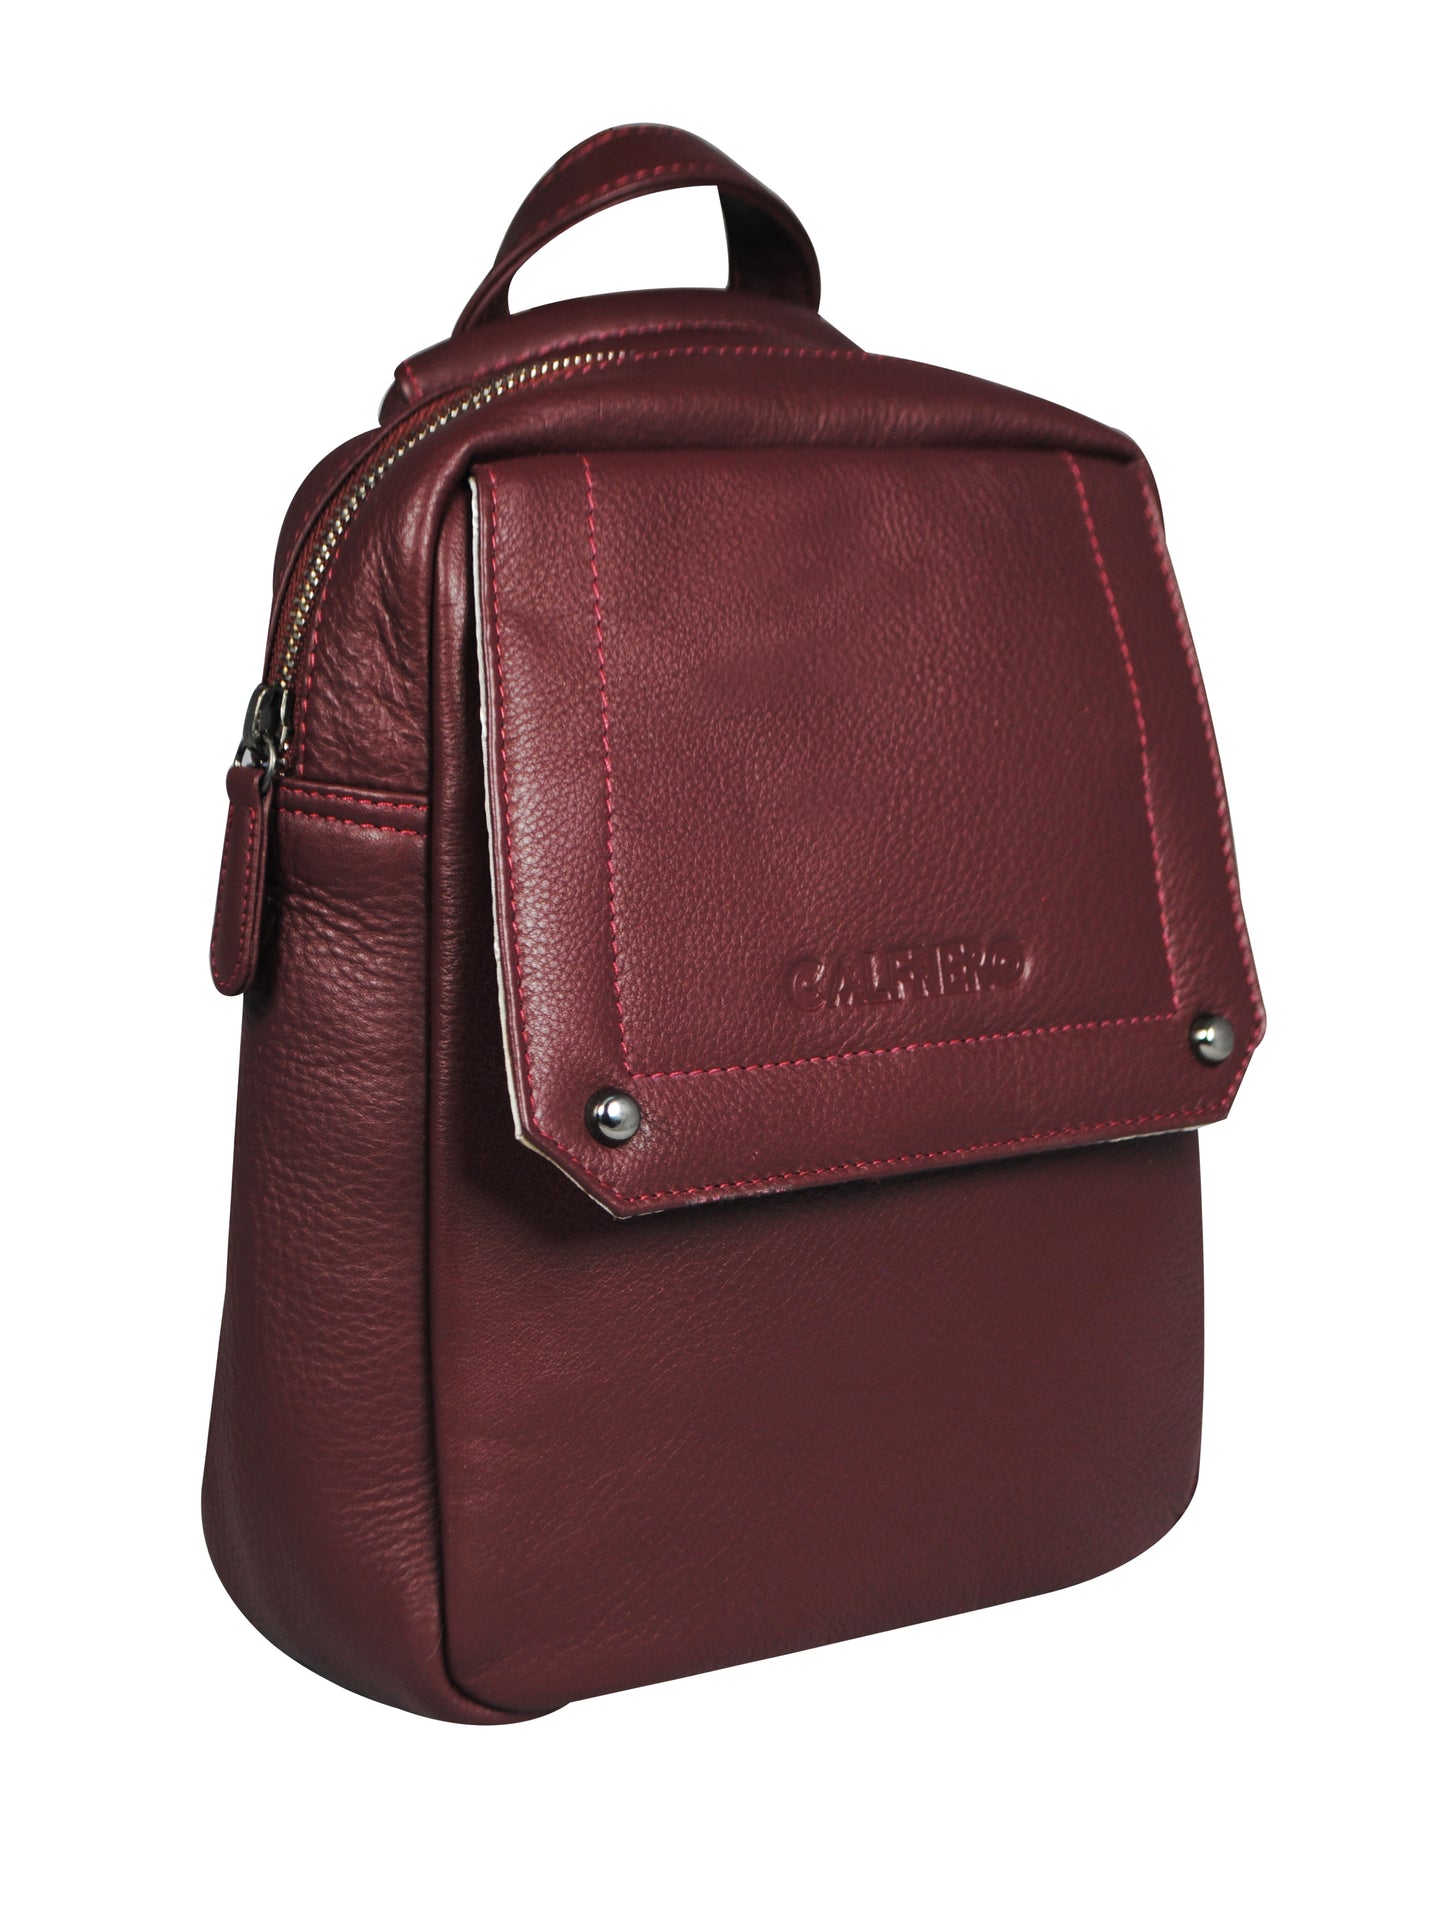 Calfnero Genuine Leather Women's Backpack (71084-Brodo)